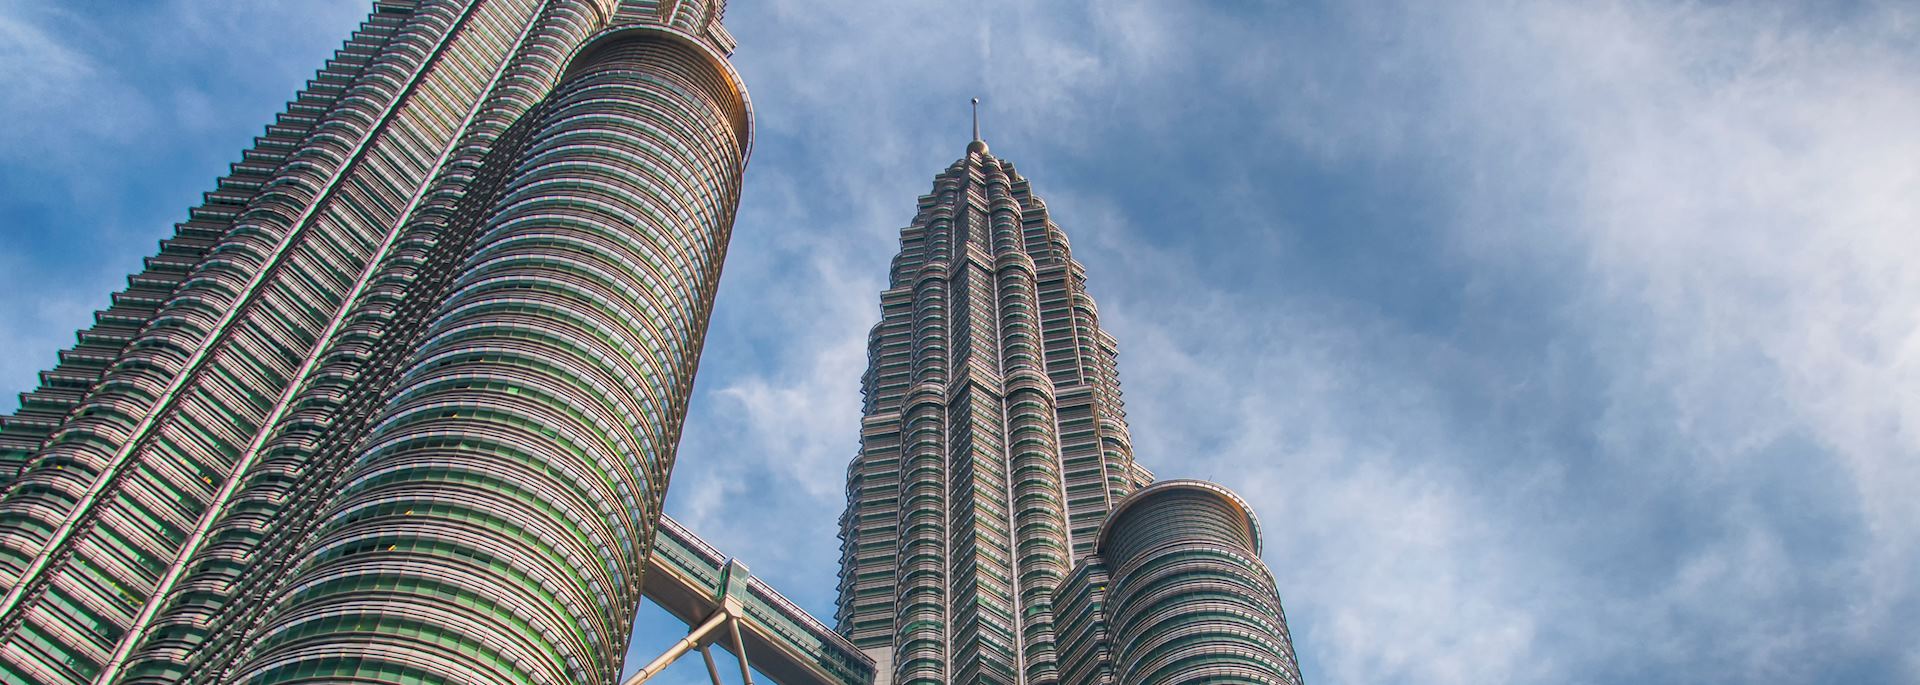 Petronas Towers, Kuala Lumpur